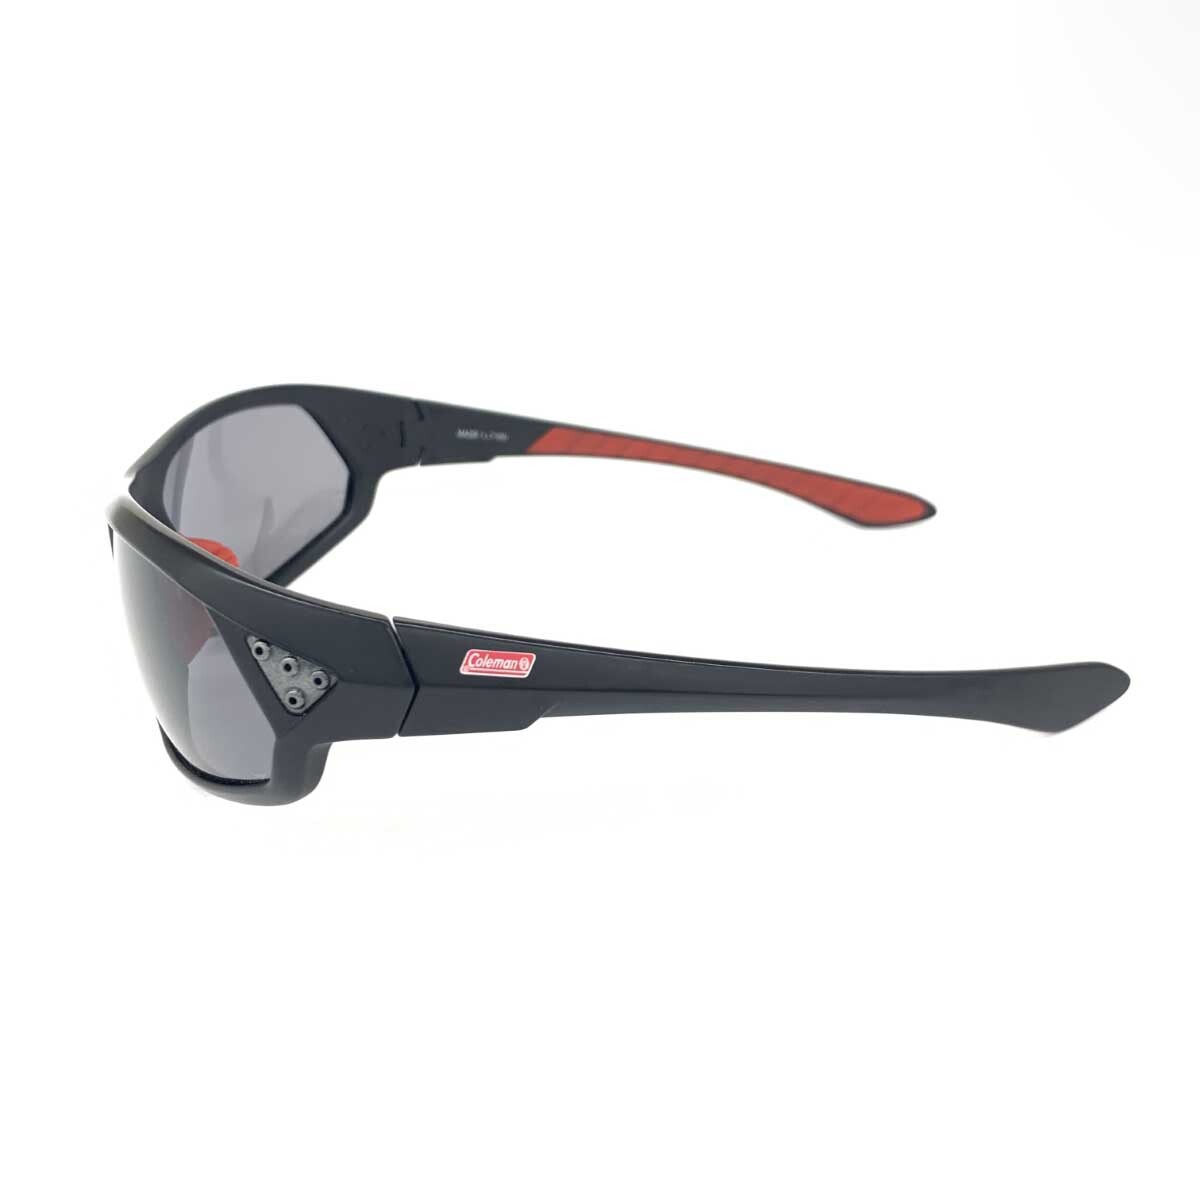 *Coleman Coleman sunglasses *CM4016-2 black men's sunglasses clothing accessories 